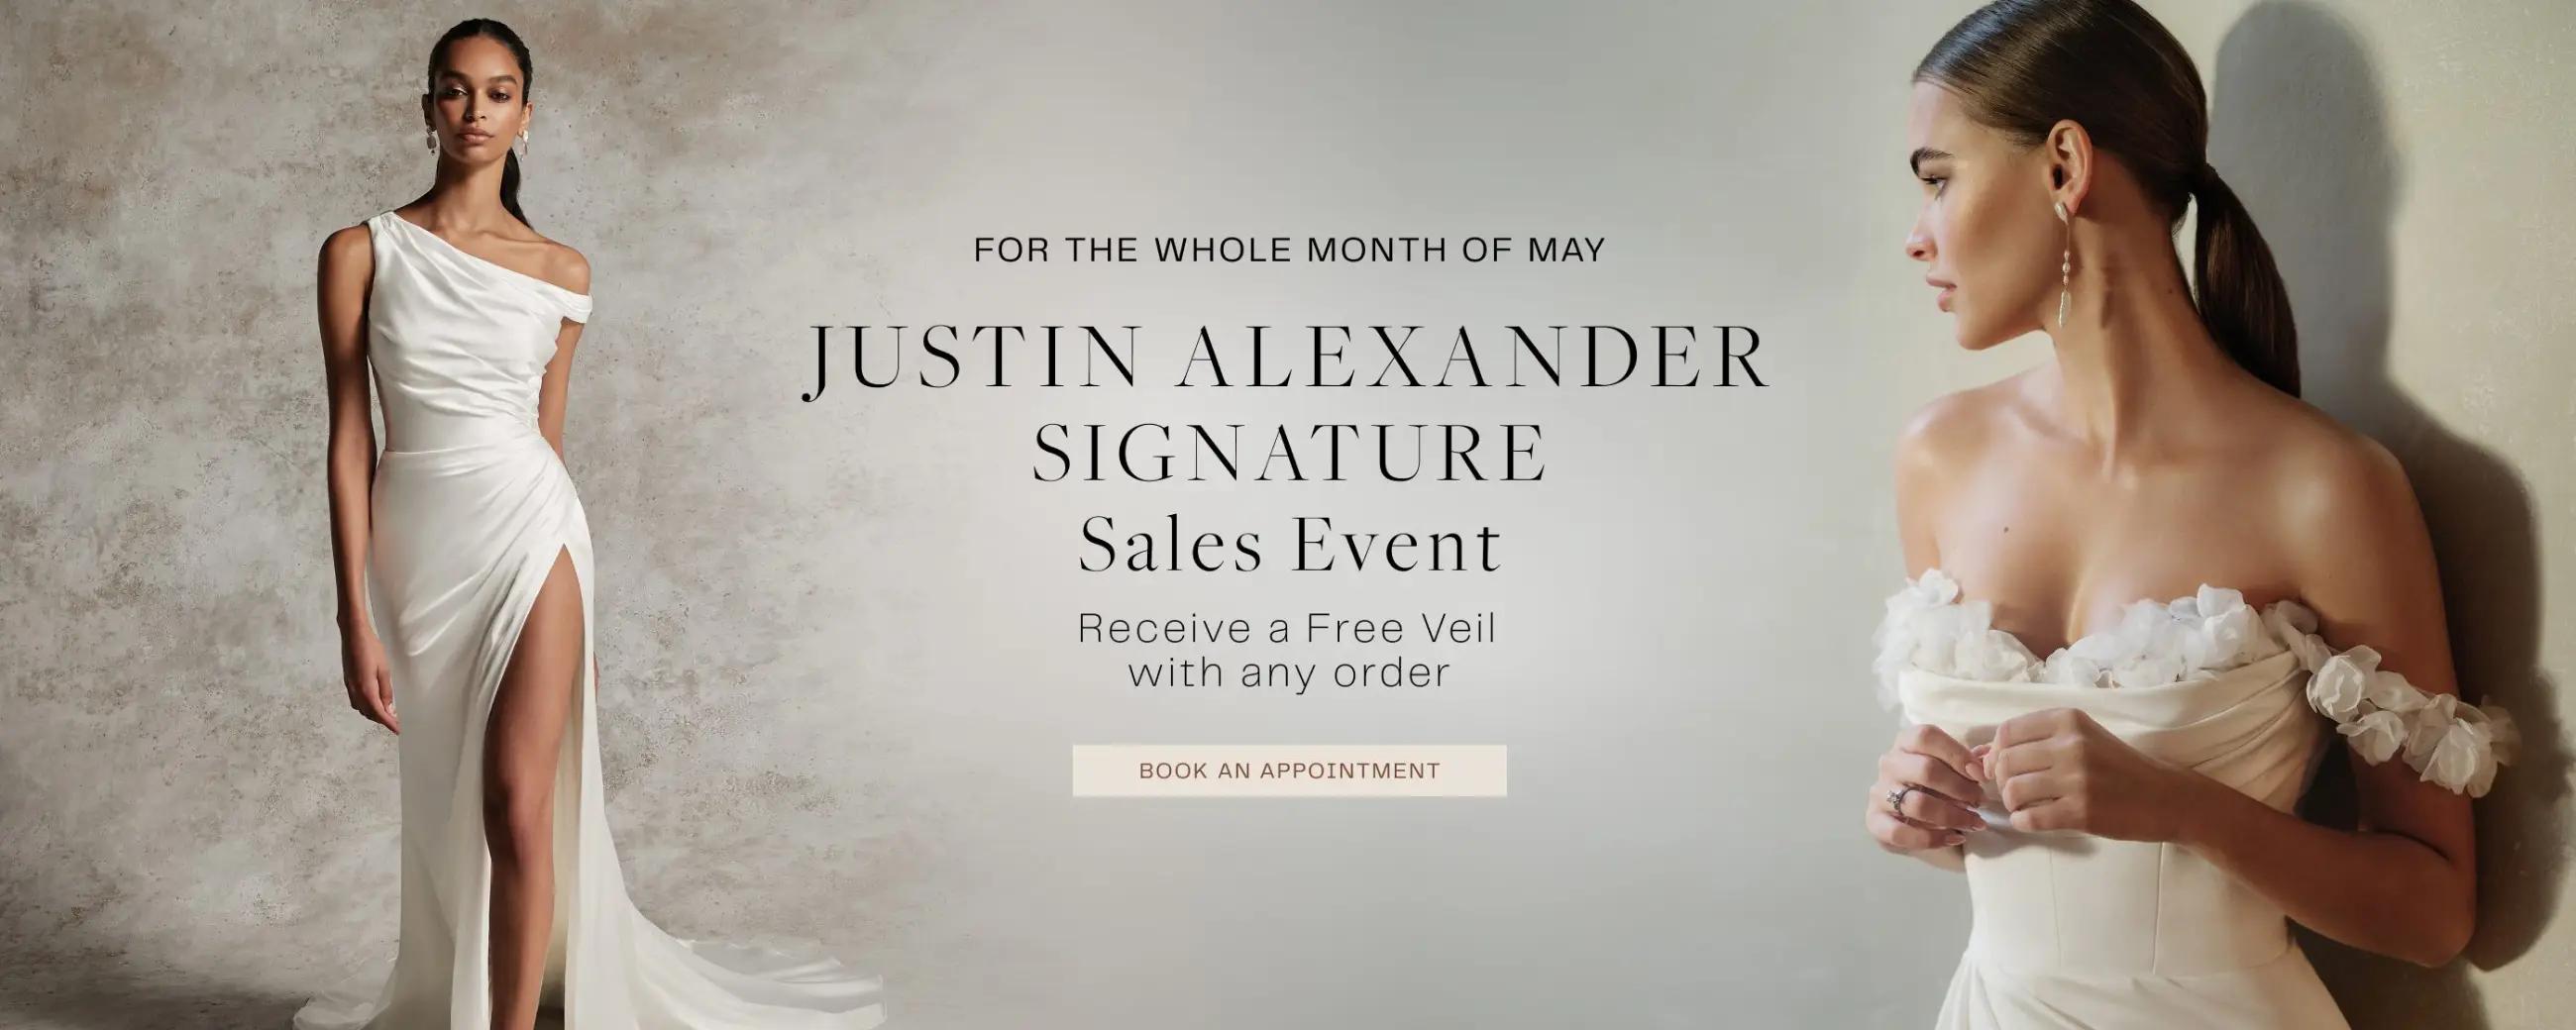 Justin Alexander Signature Sales Event Banner